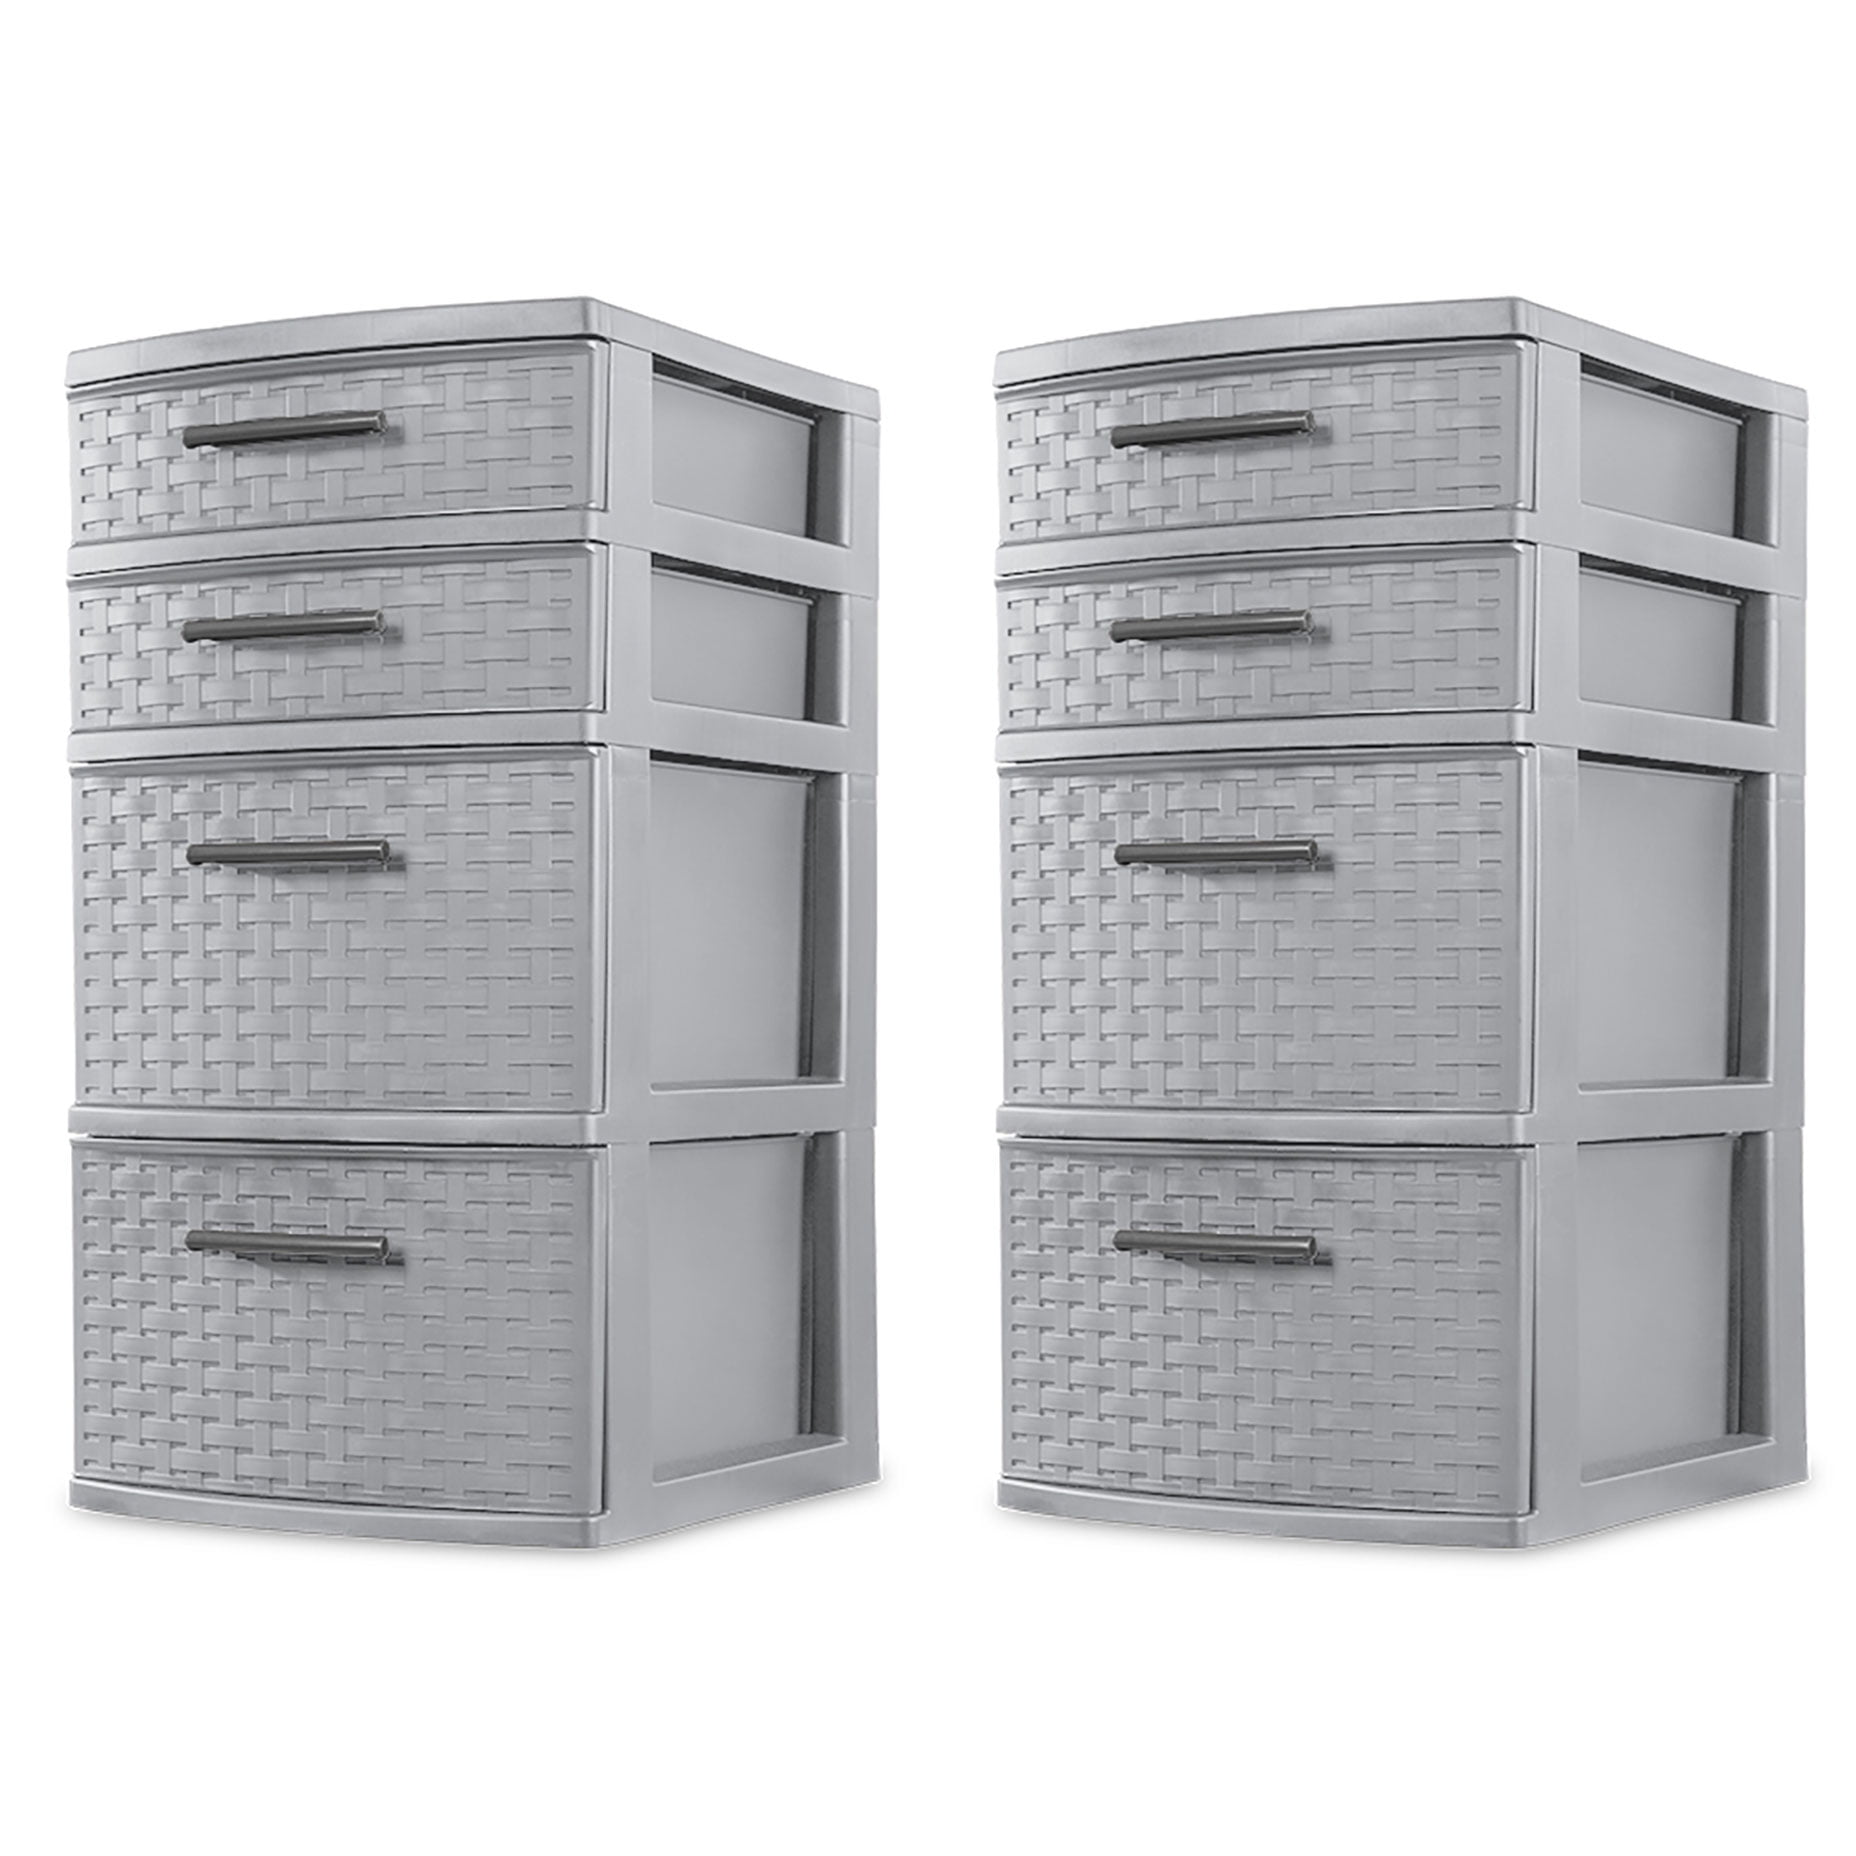 Weave storage drawers